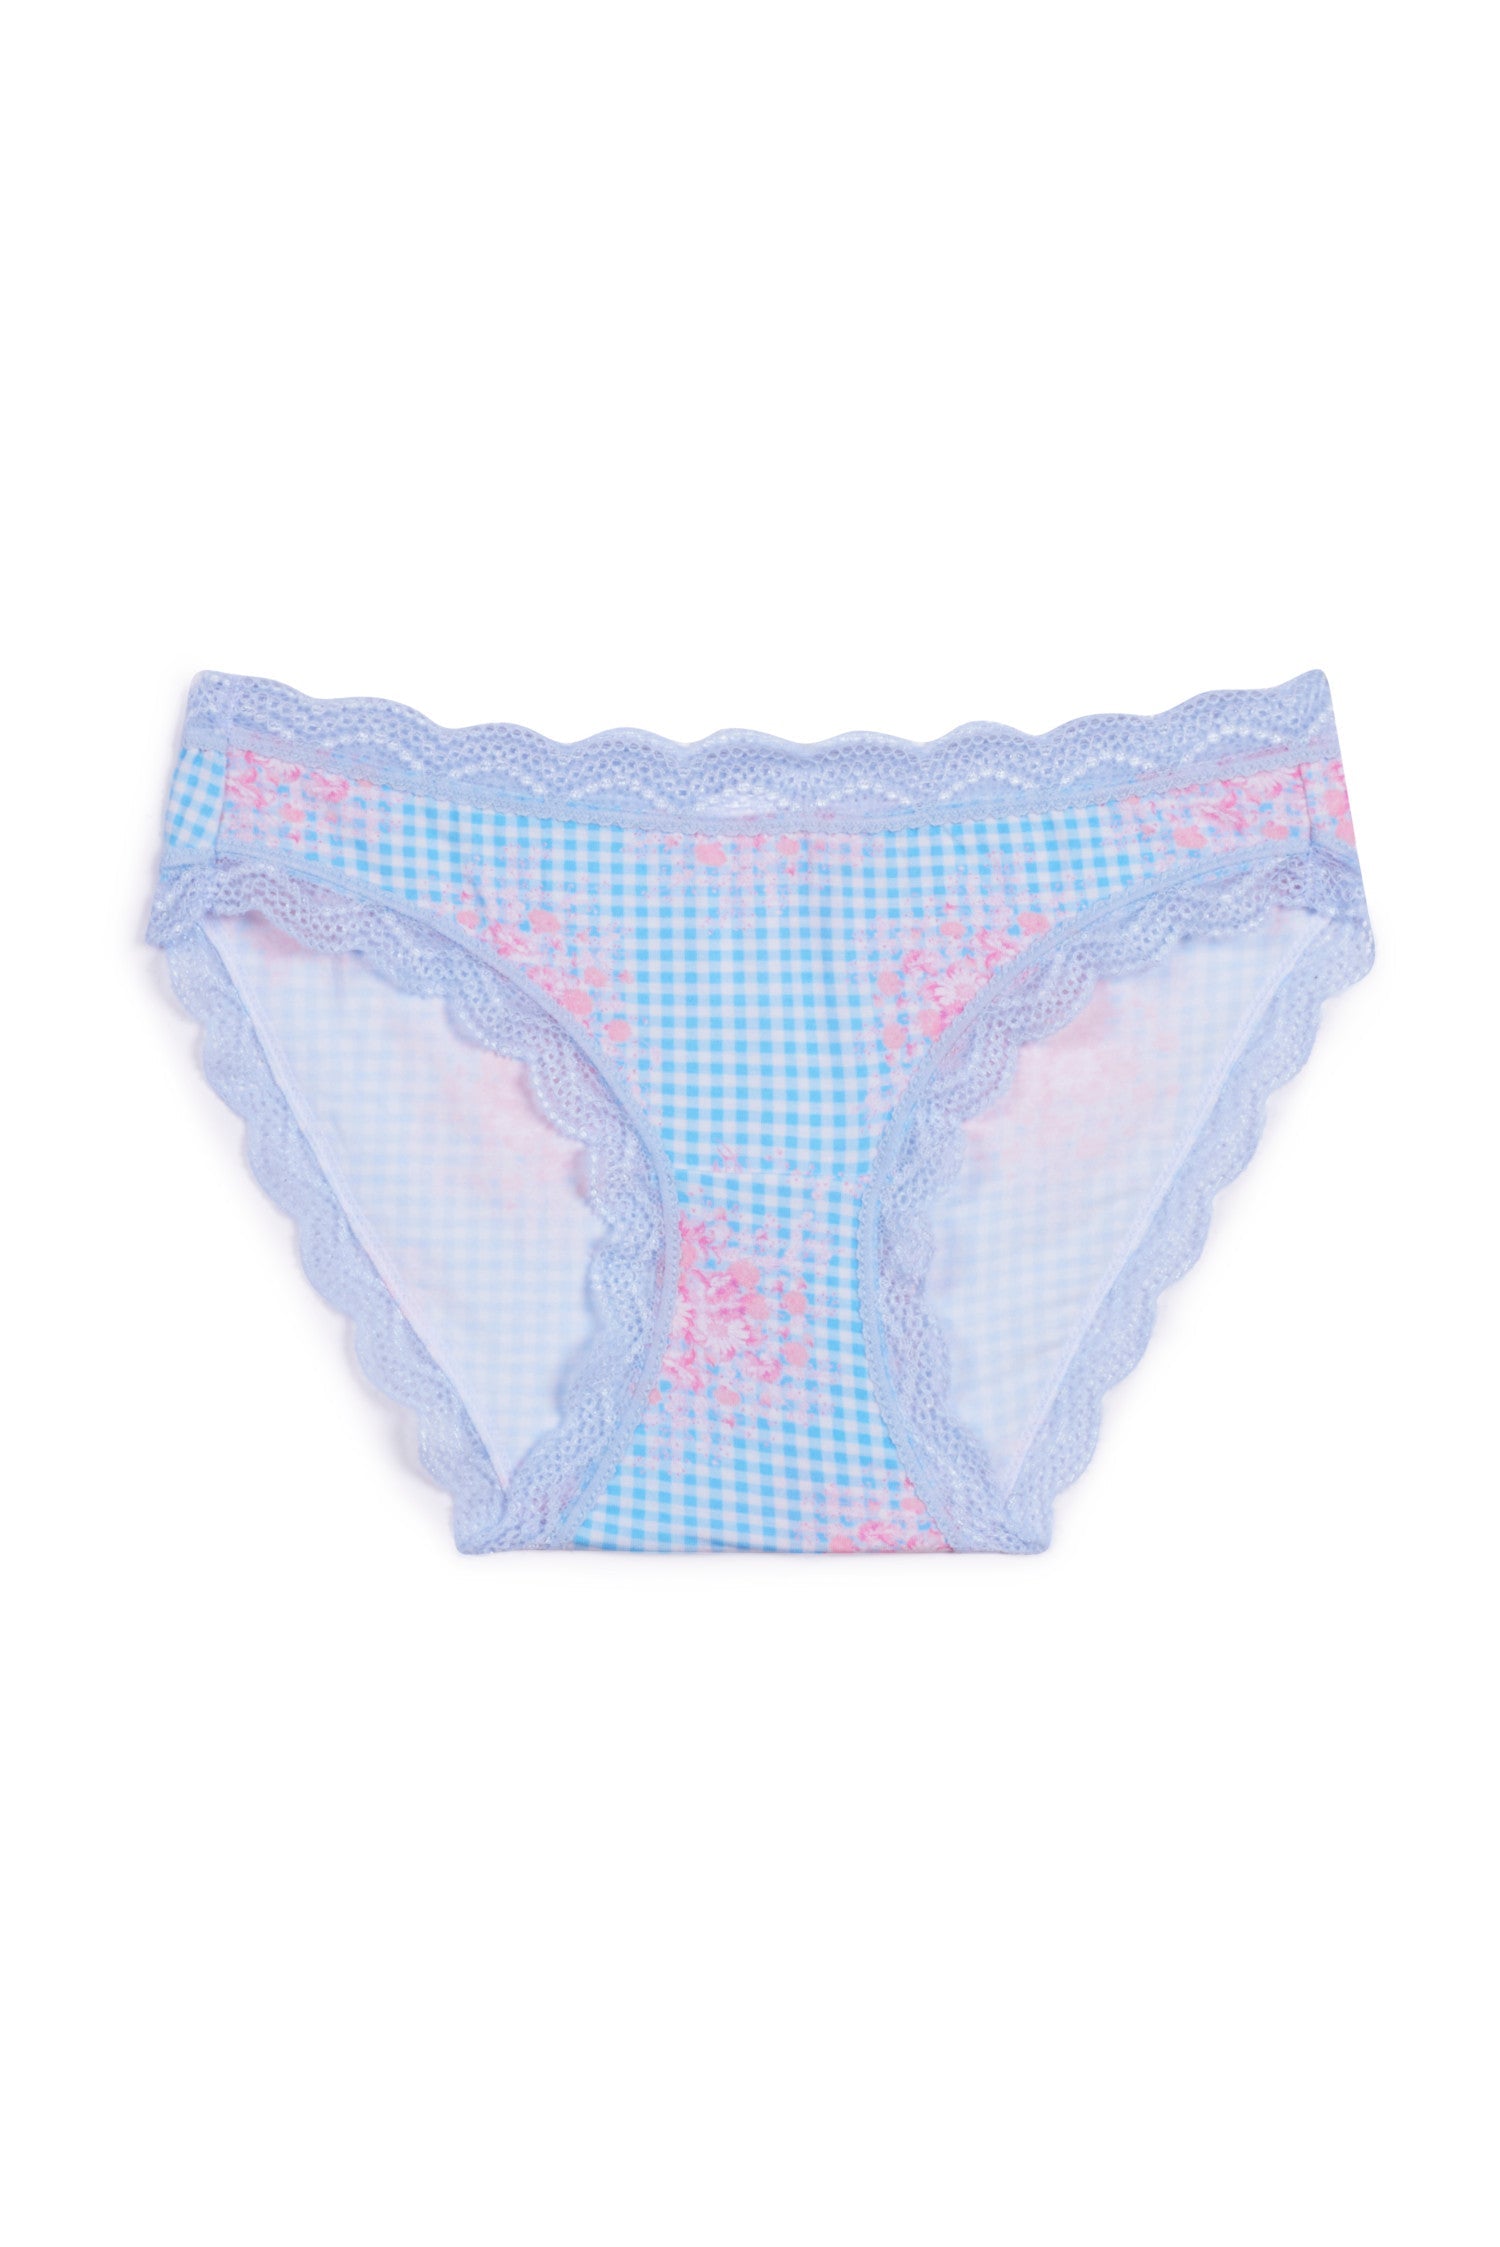 Womens sustainable multi printed lace knicker underwear box set